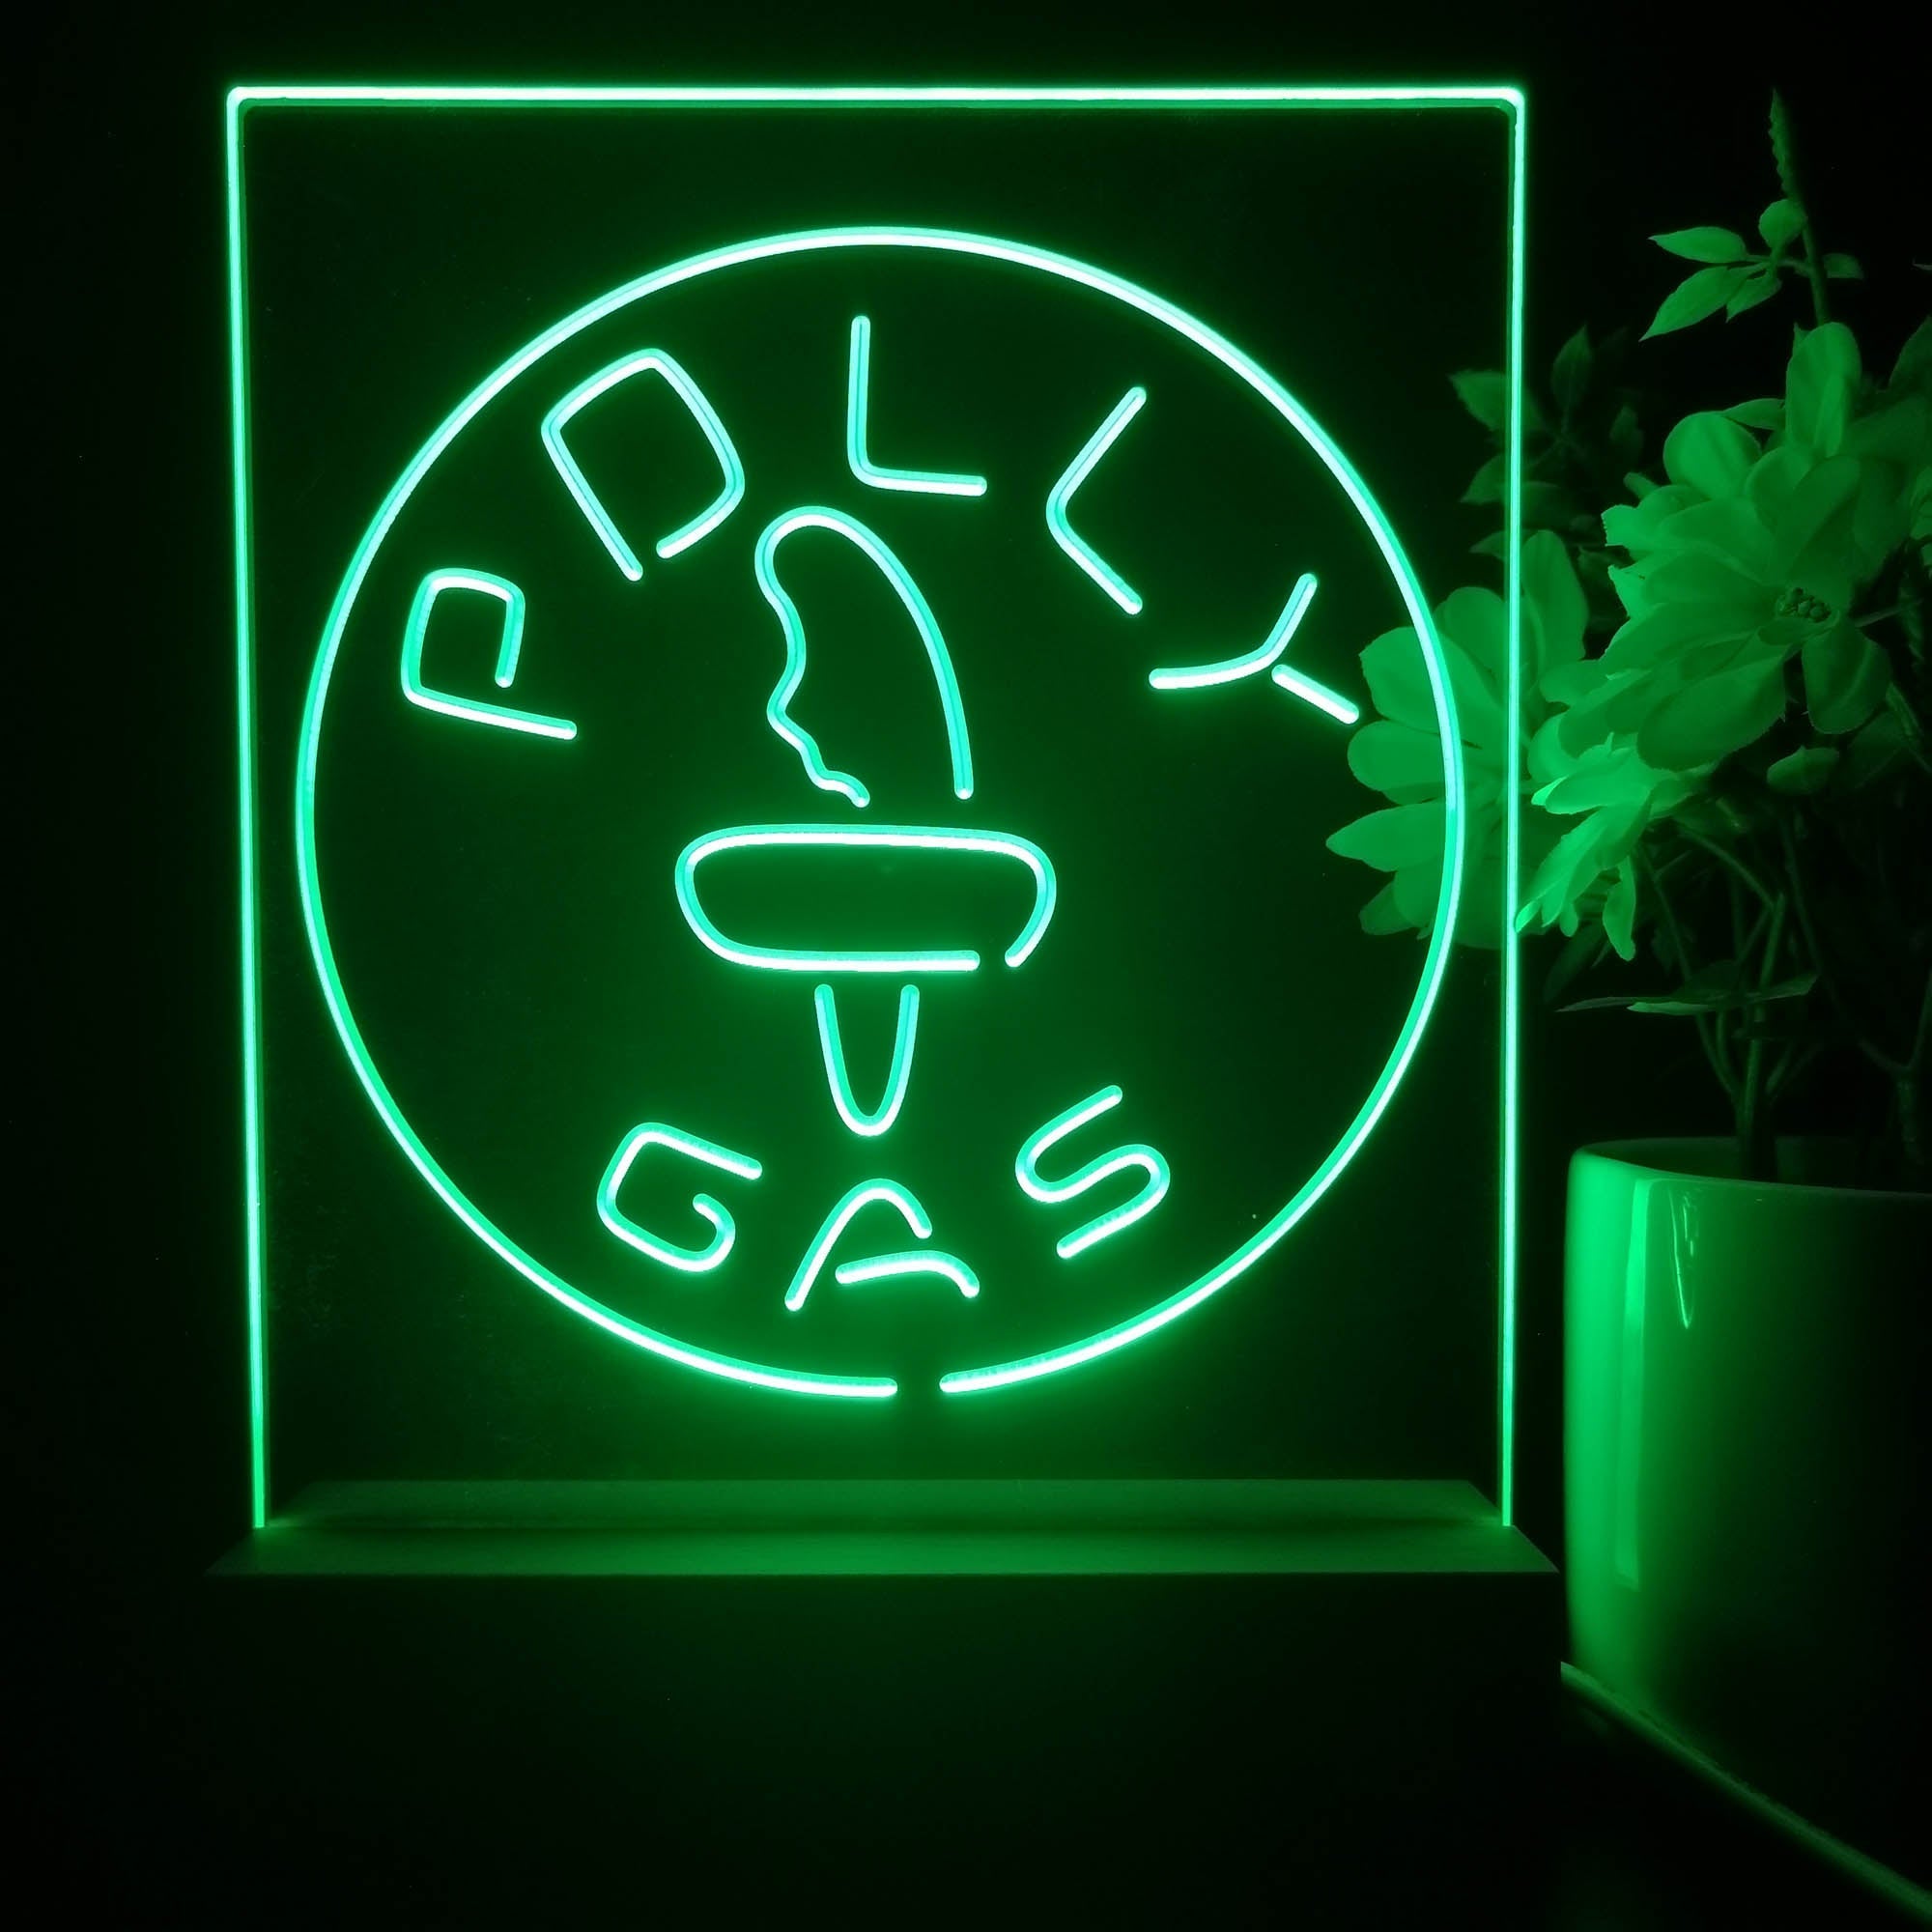 Polly Gas Man Cave 3D Illusion Night Light Desk Lamp